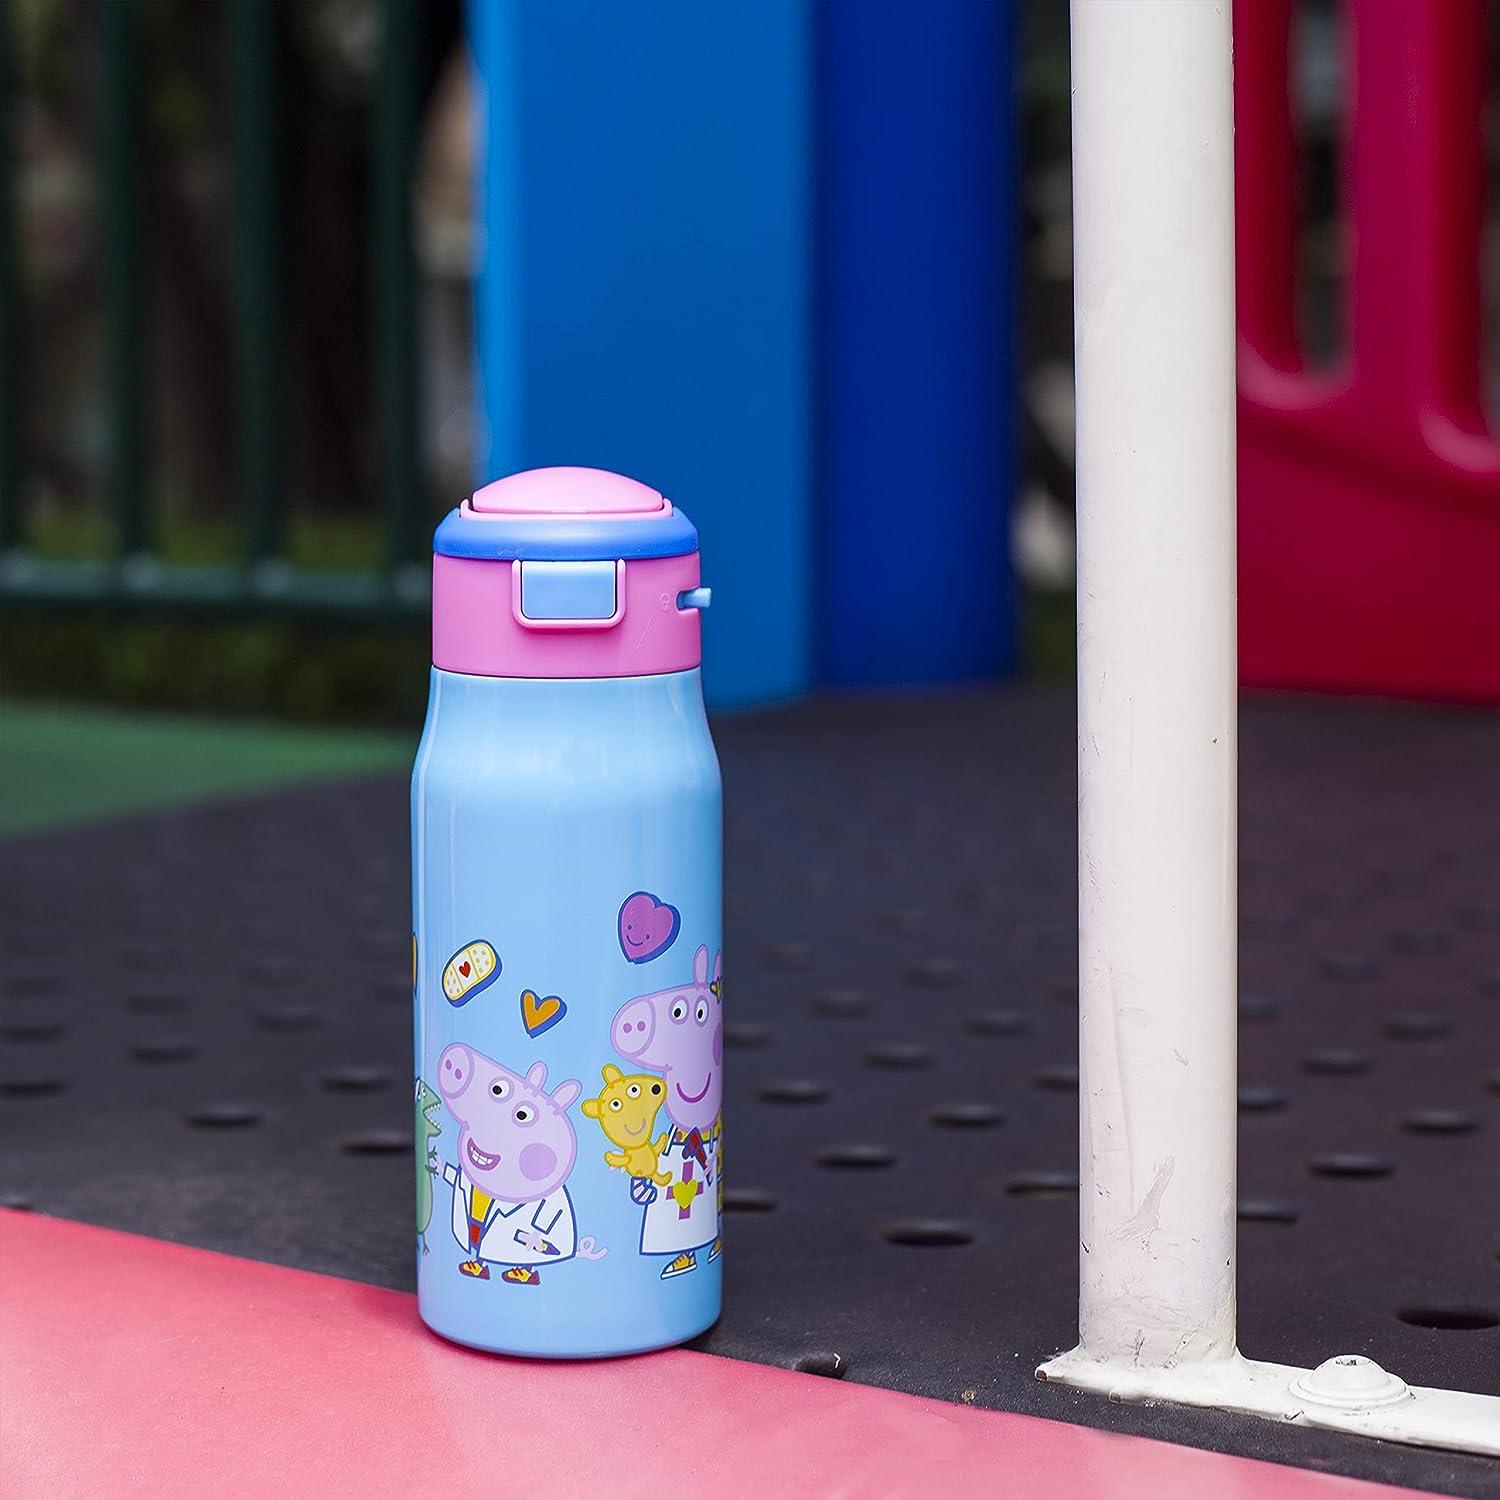 Zak Designs Peppa Pig Kids Water Bottle For School or Travel, 16oz Durable  Plastic Water Bottle With…See more Zak Designs Peppa Pig Kids Water Bottle